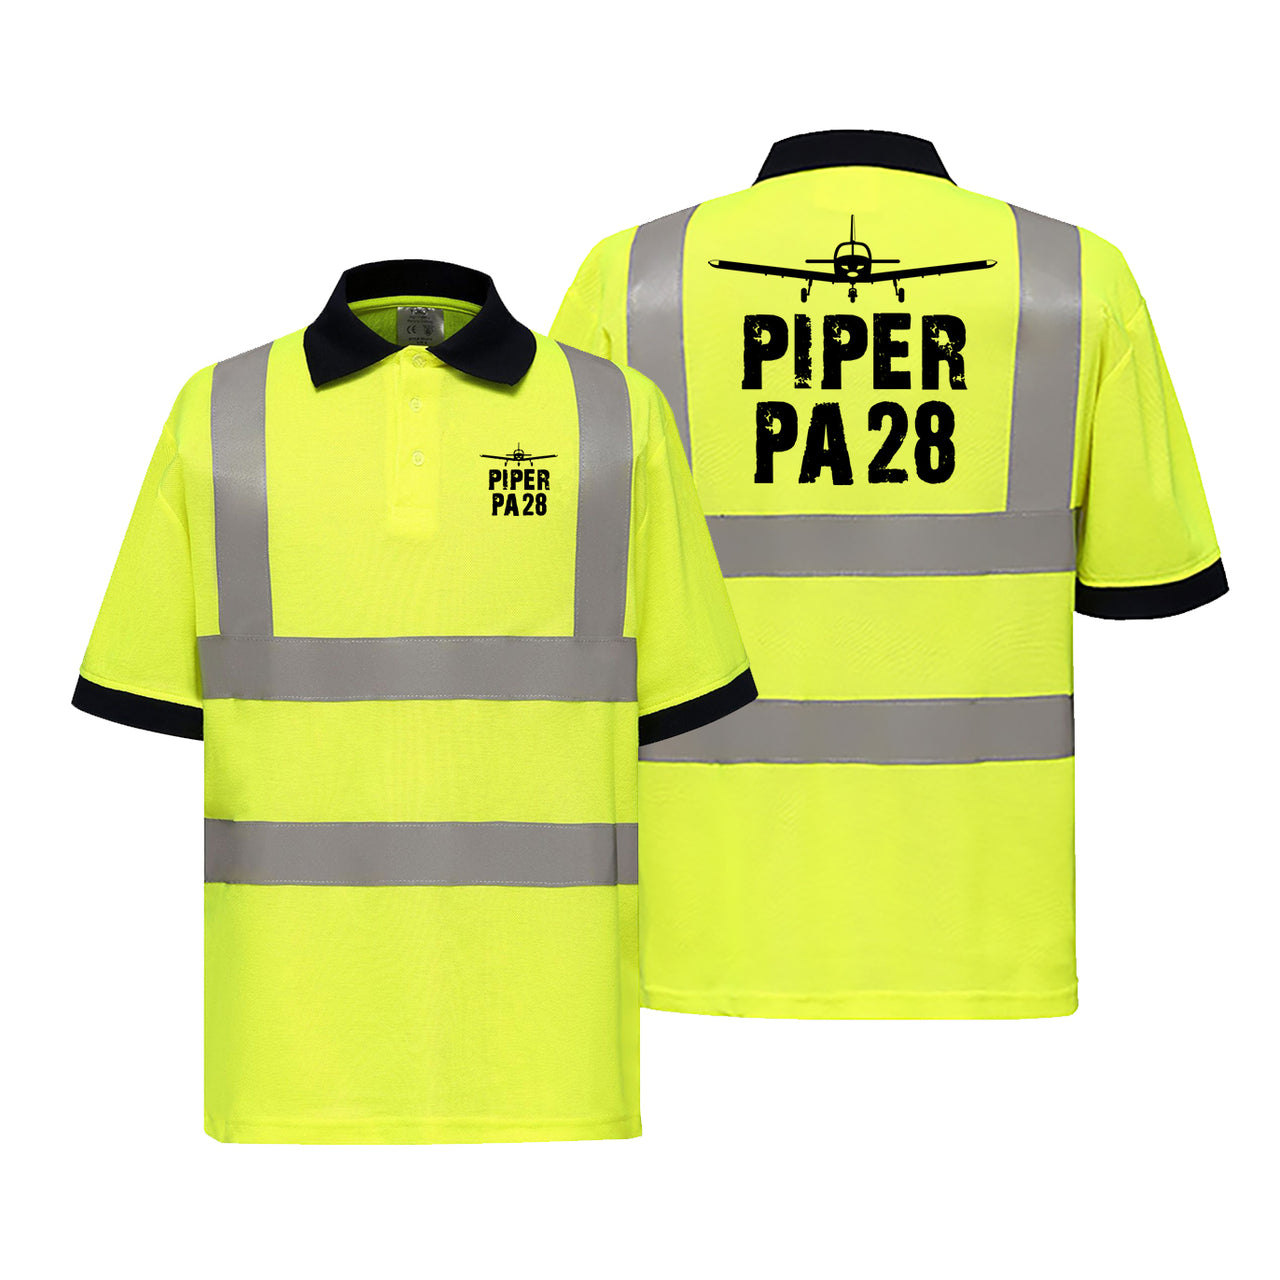 Piper PA28 & Plane Designed Reflective Polo T-Shirts